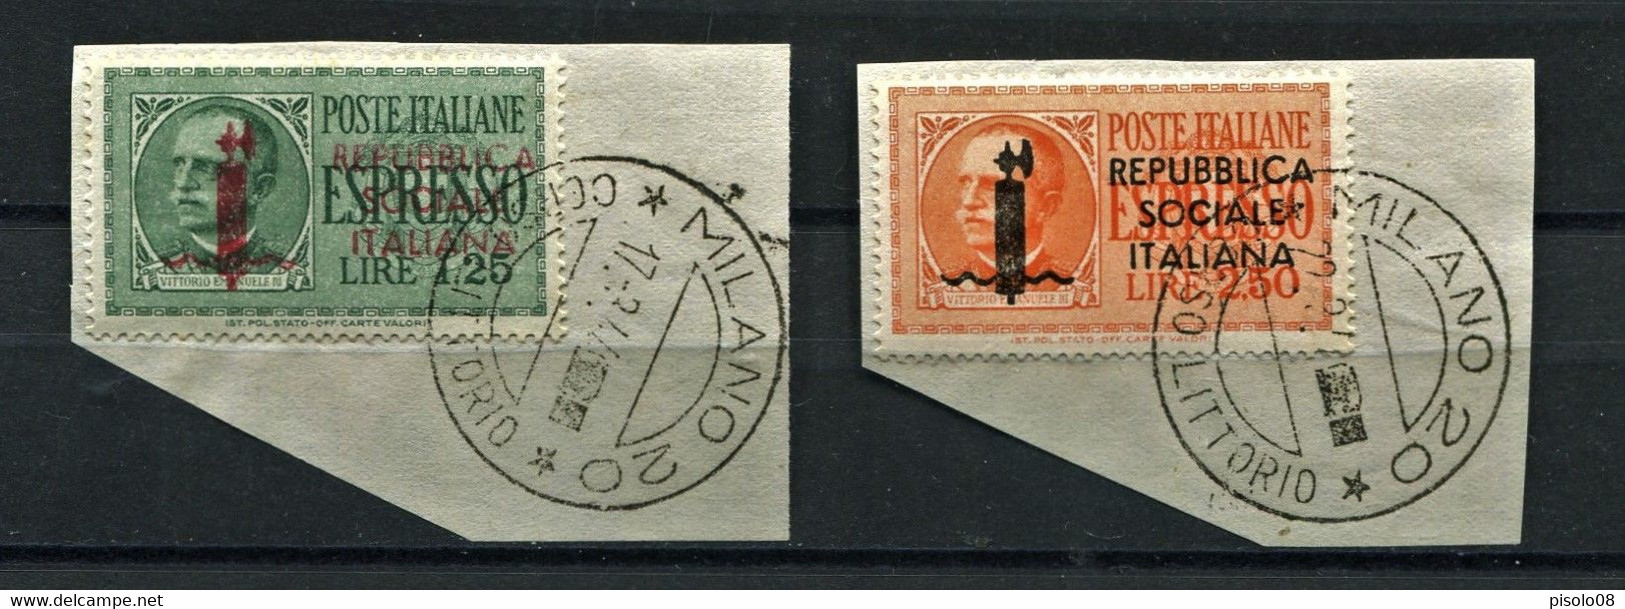 RSI 1944 ESPRESSI USATI SU FRAMMENTO - Express Mail